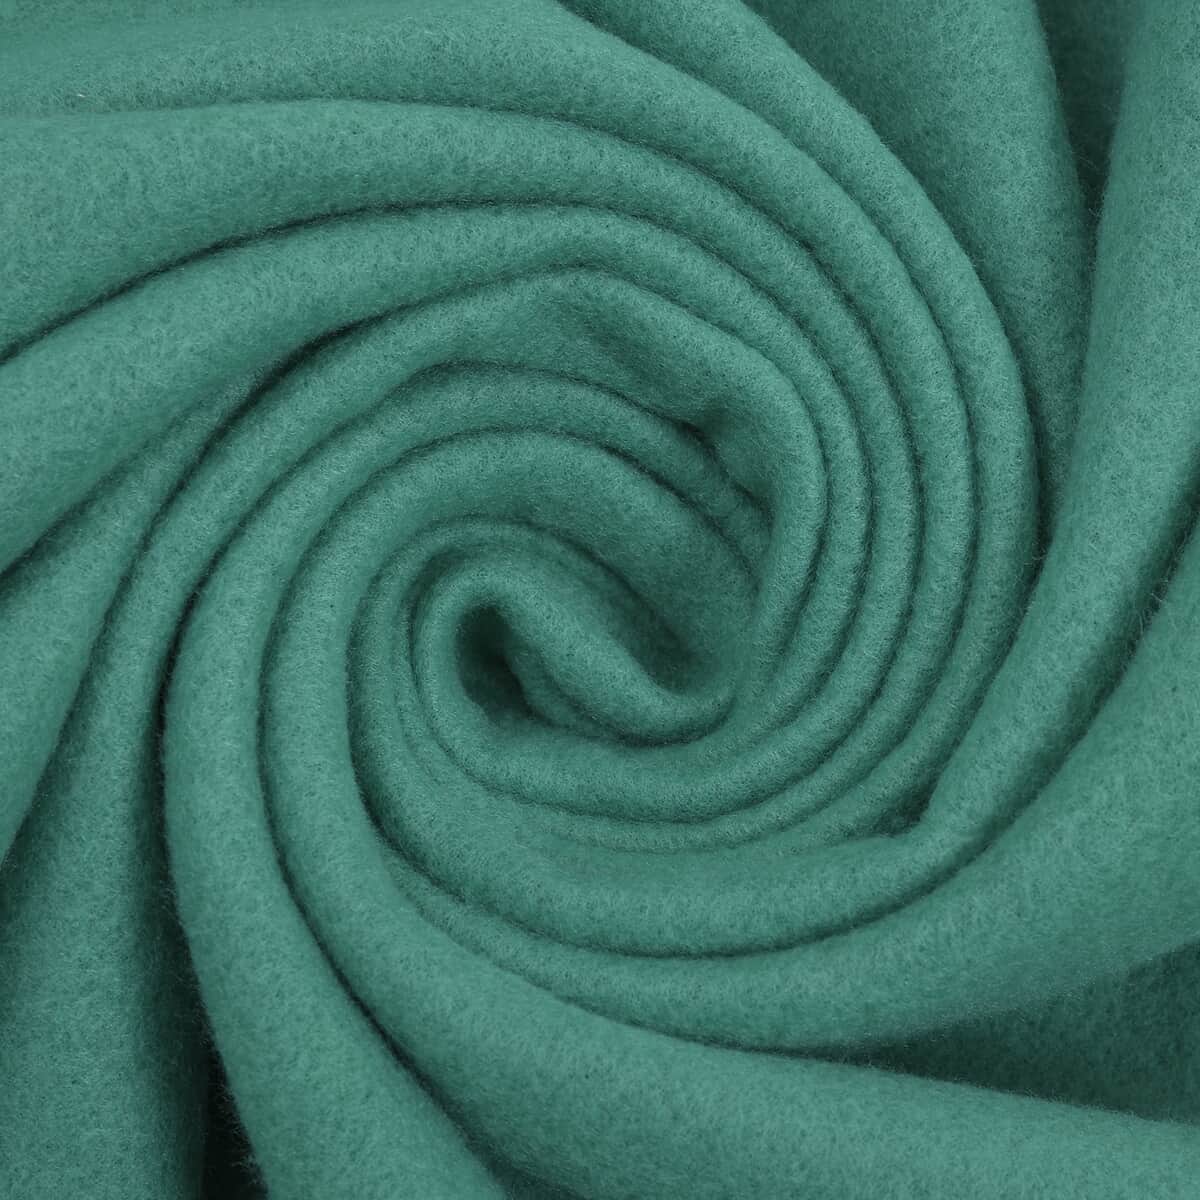 Homesmart 2 in 1 Green Solid Fleece Solid Travel Blanket with Folded Storage Pocket (Microfiber) image number 5